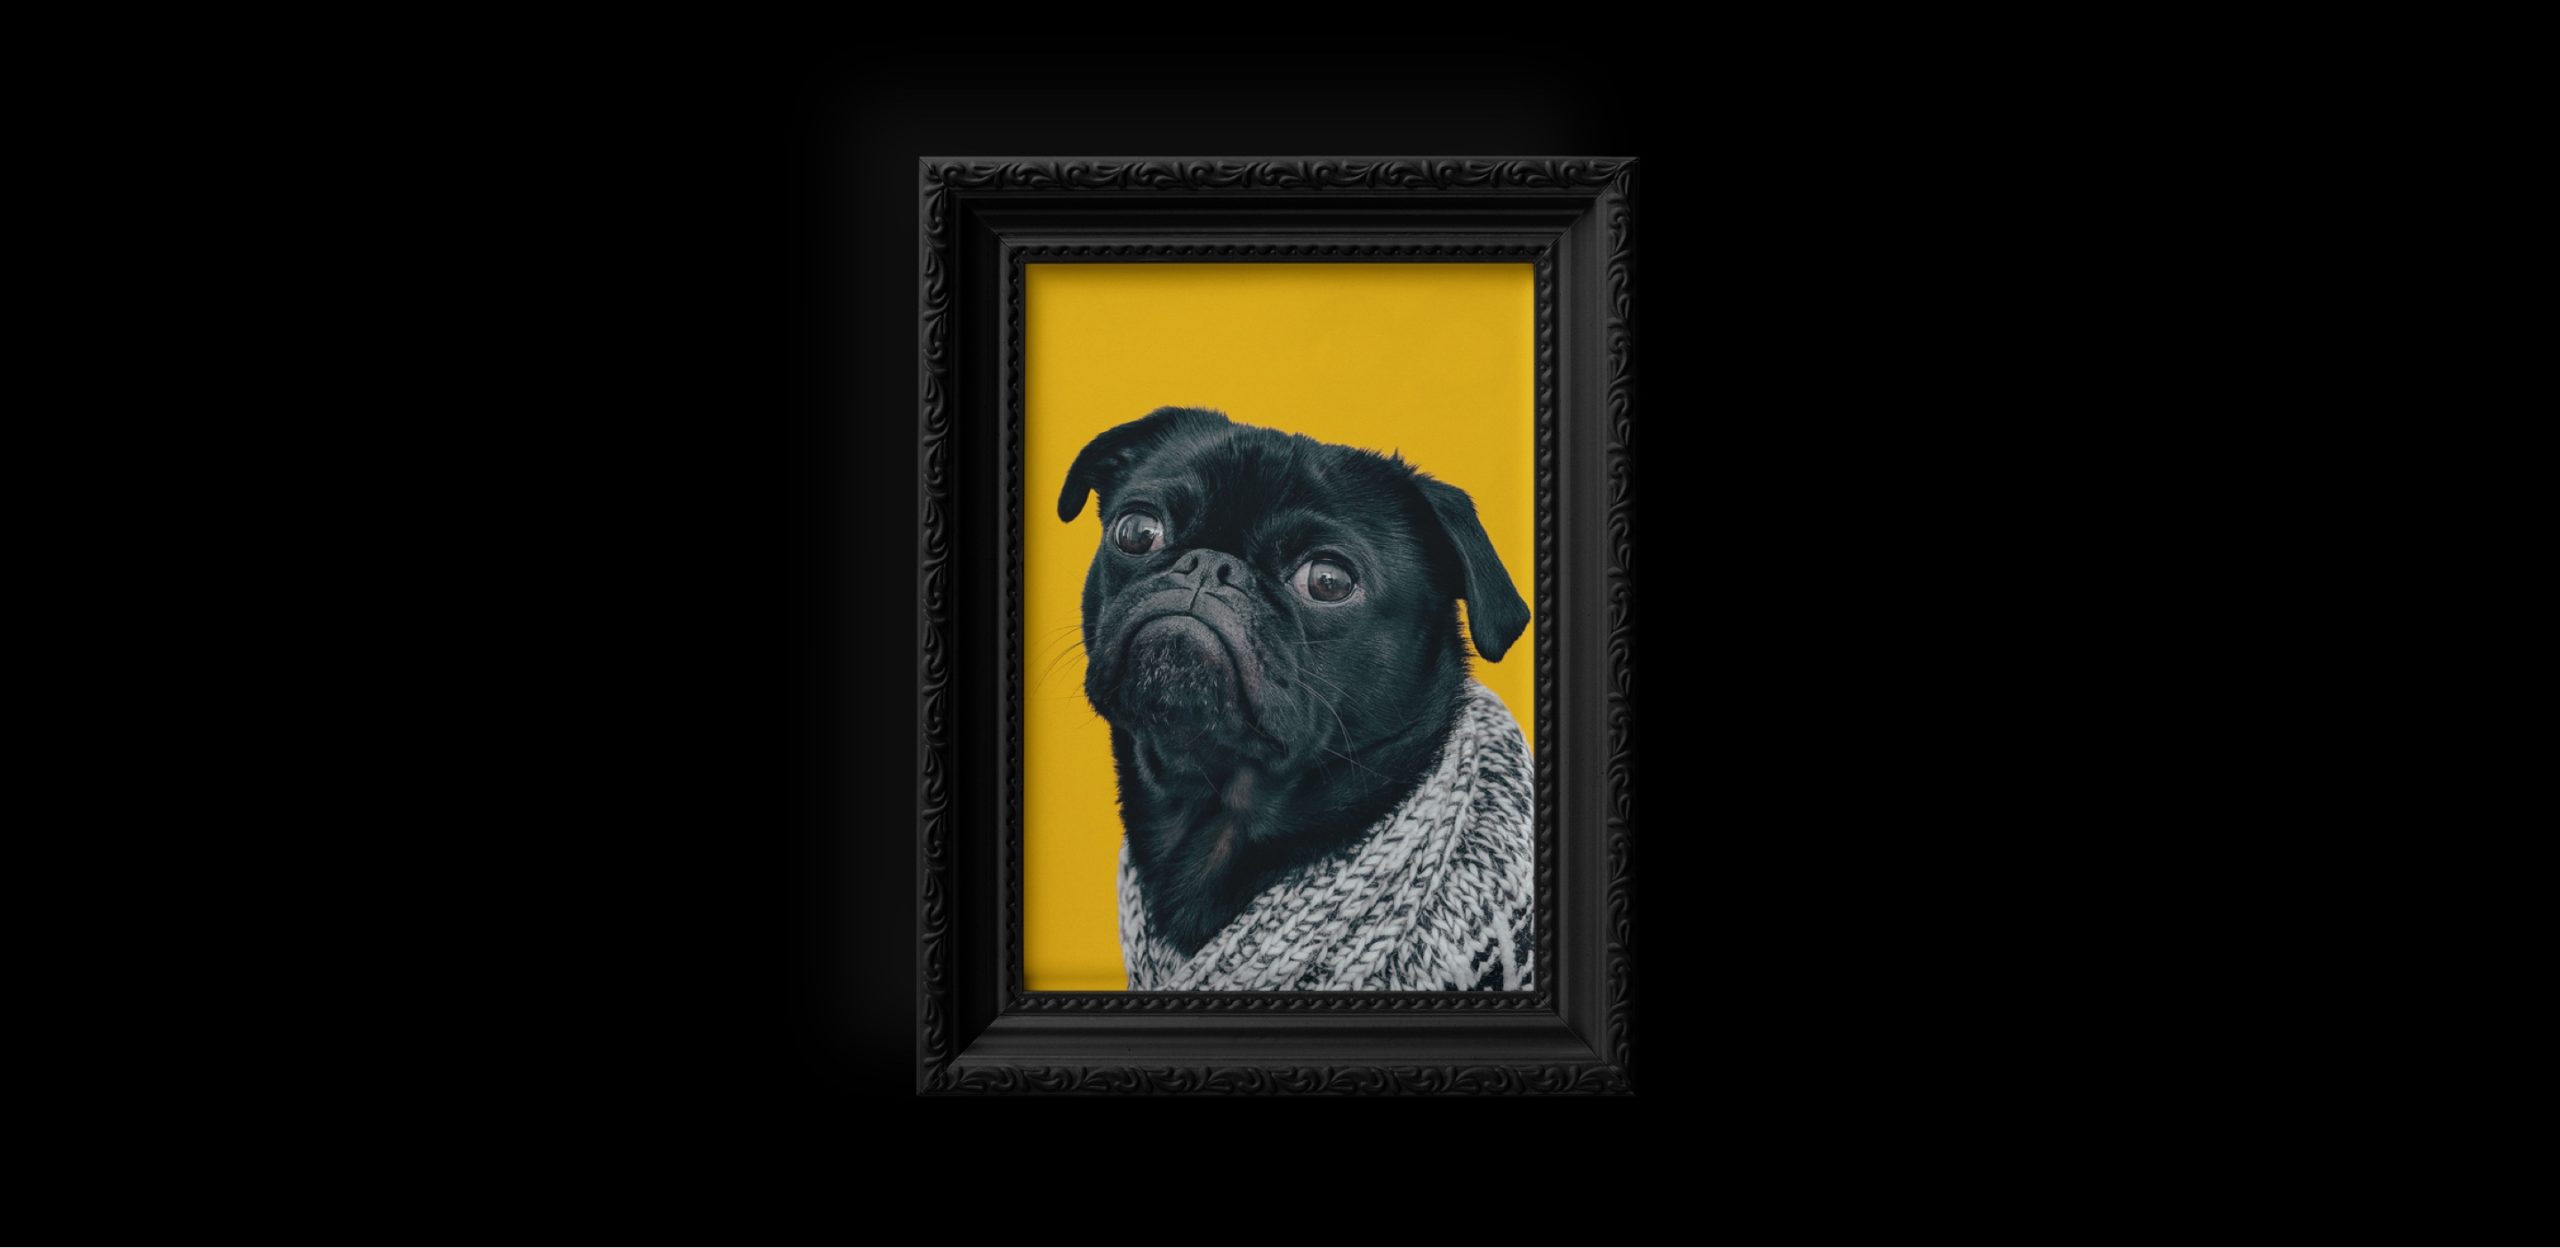 pug dog head framed with a black background